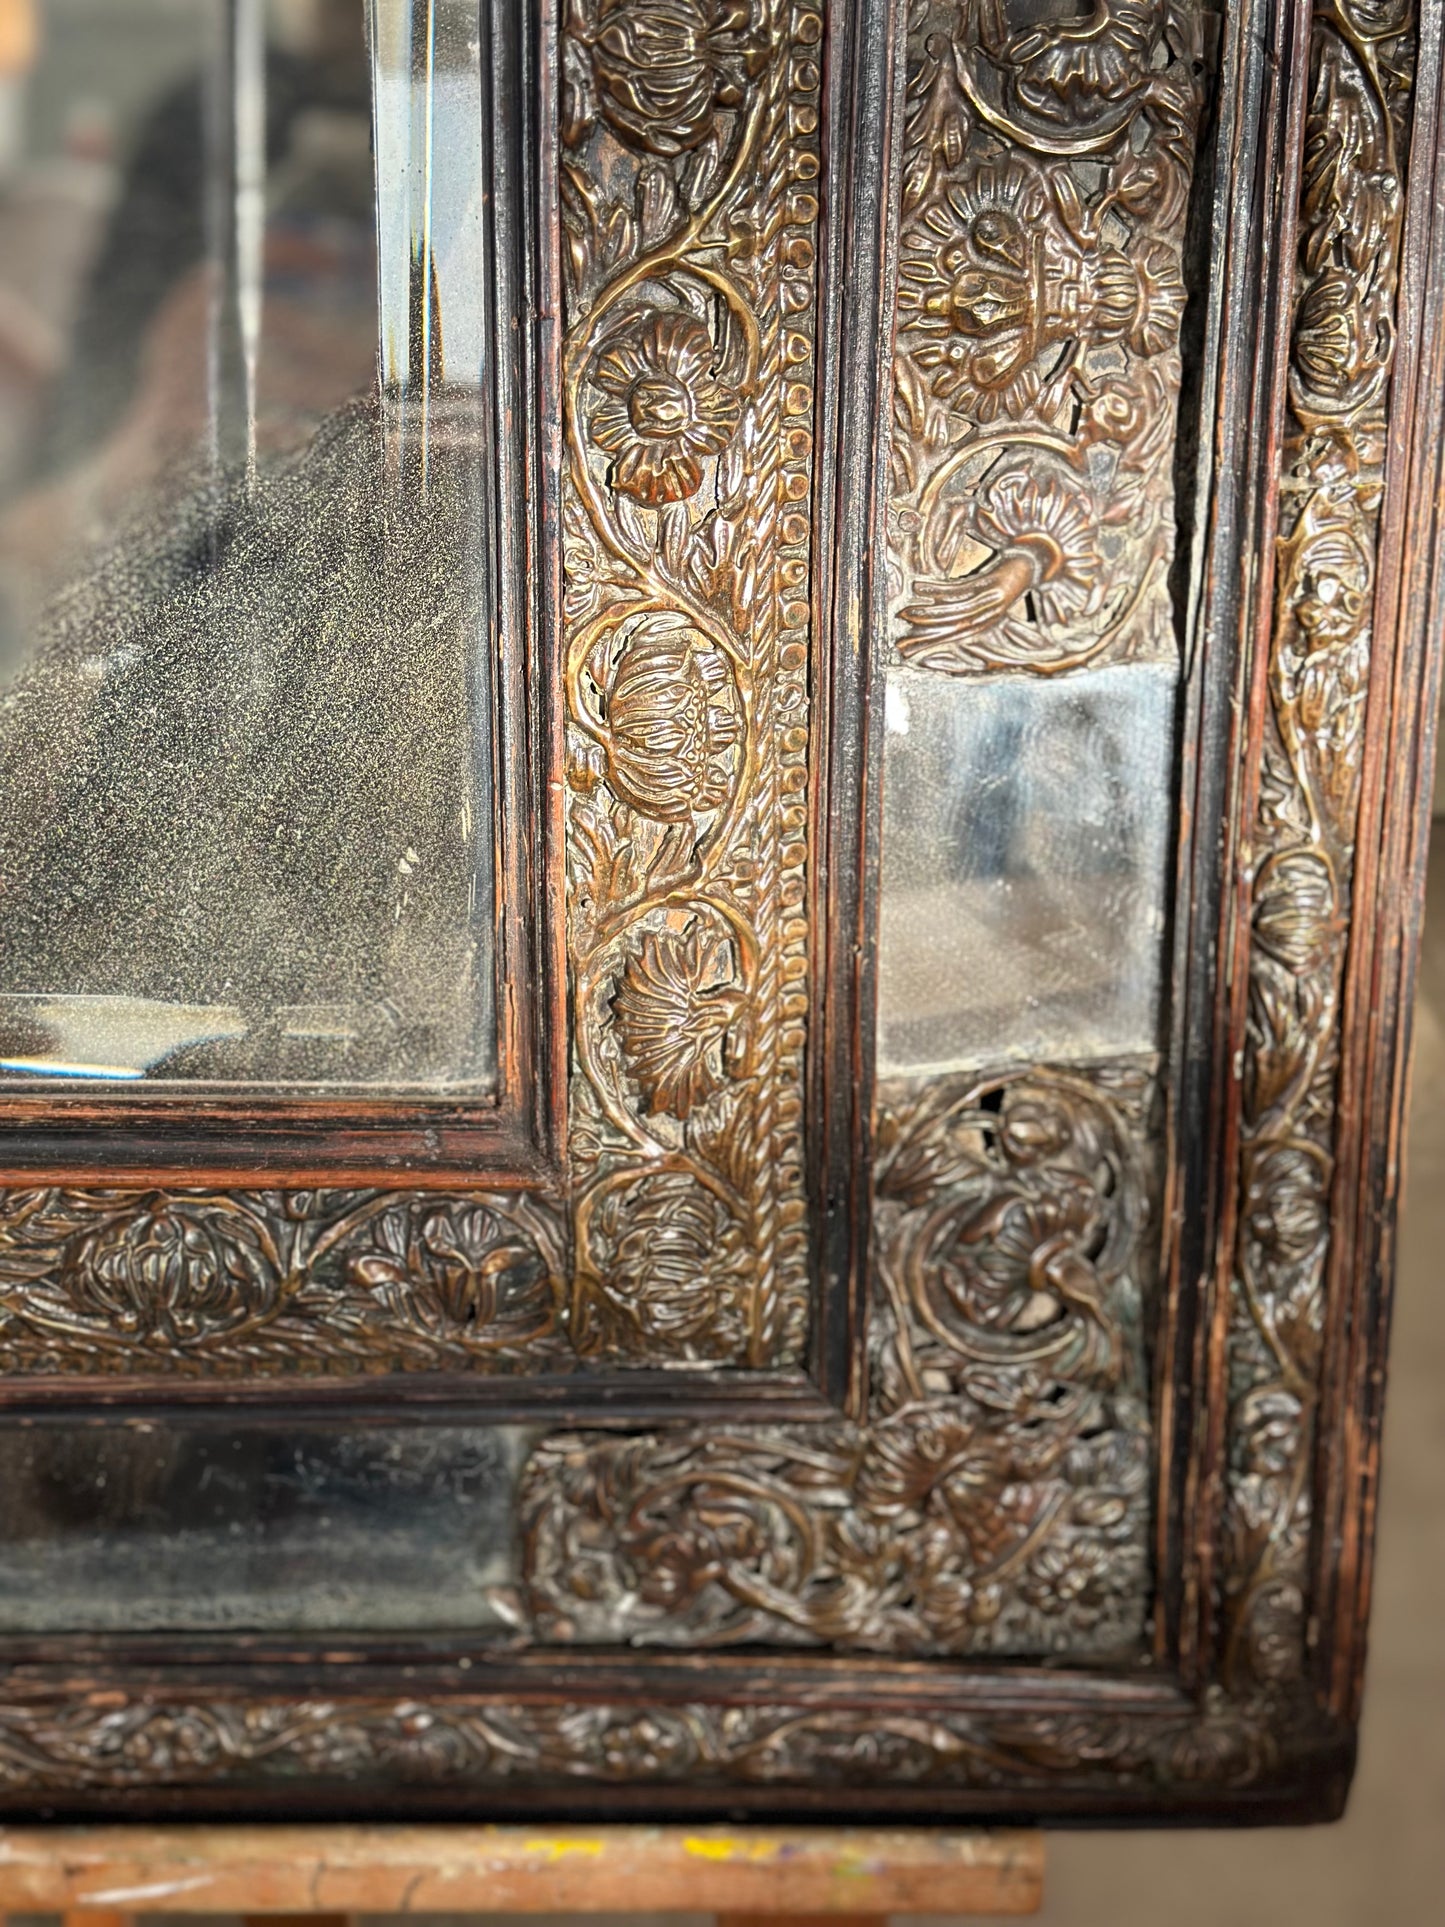 17th Century Repousse Mirror